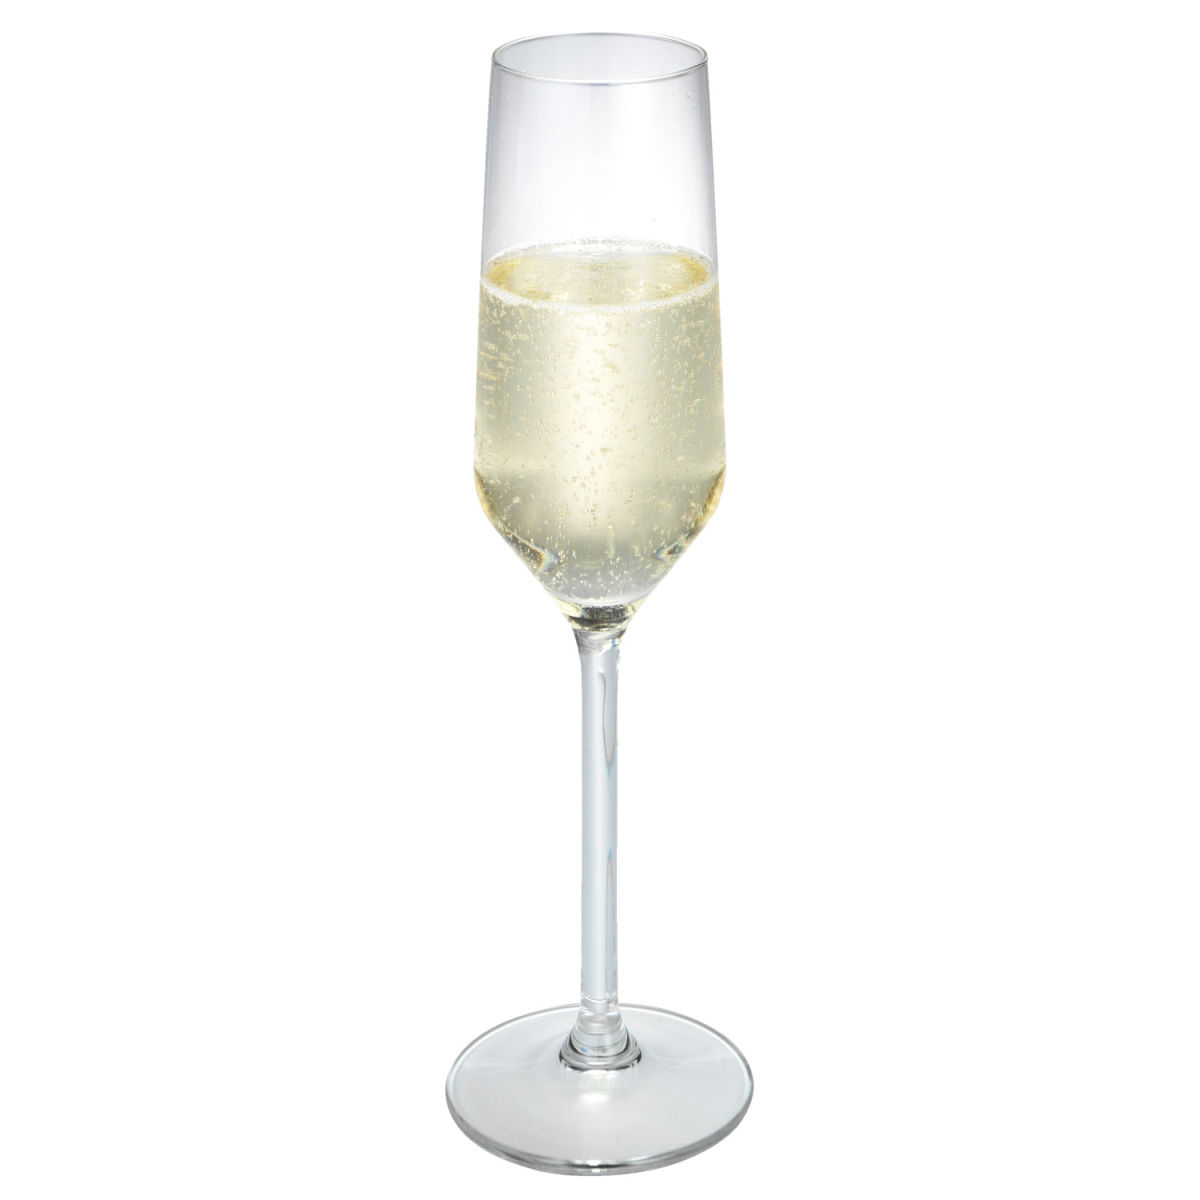 Royal leerdam Champagneglas Carré zonder vulstreepje; 220ml, 4.8x23 cm (ØxH); transparant; 6 stuk / verpakking